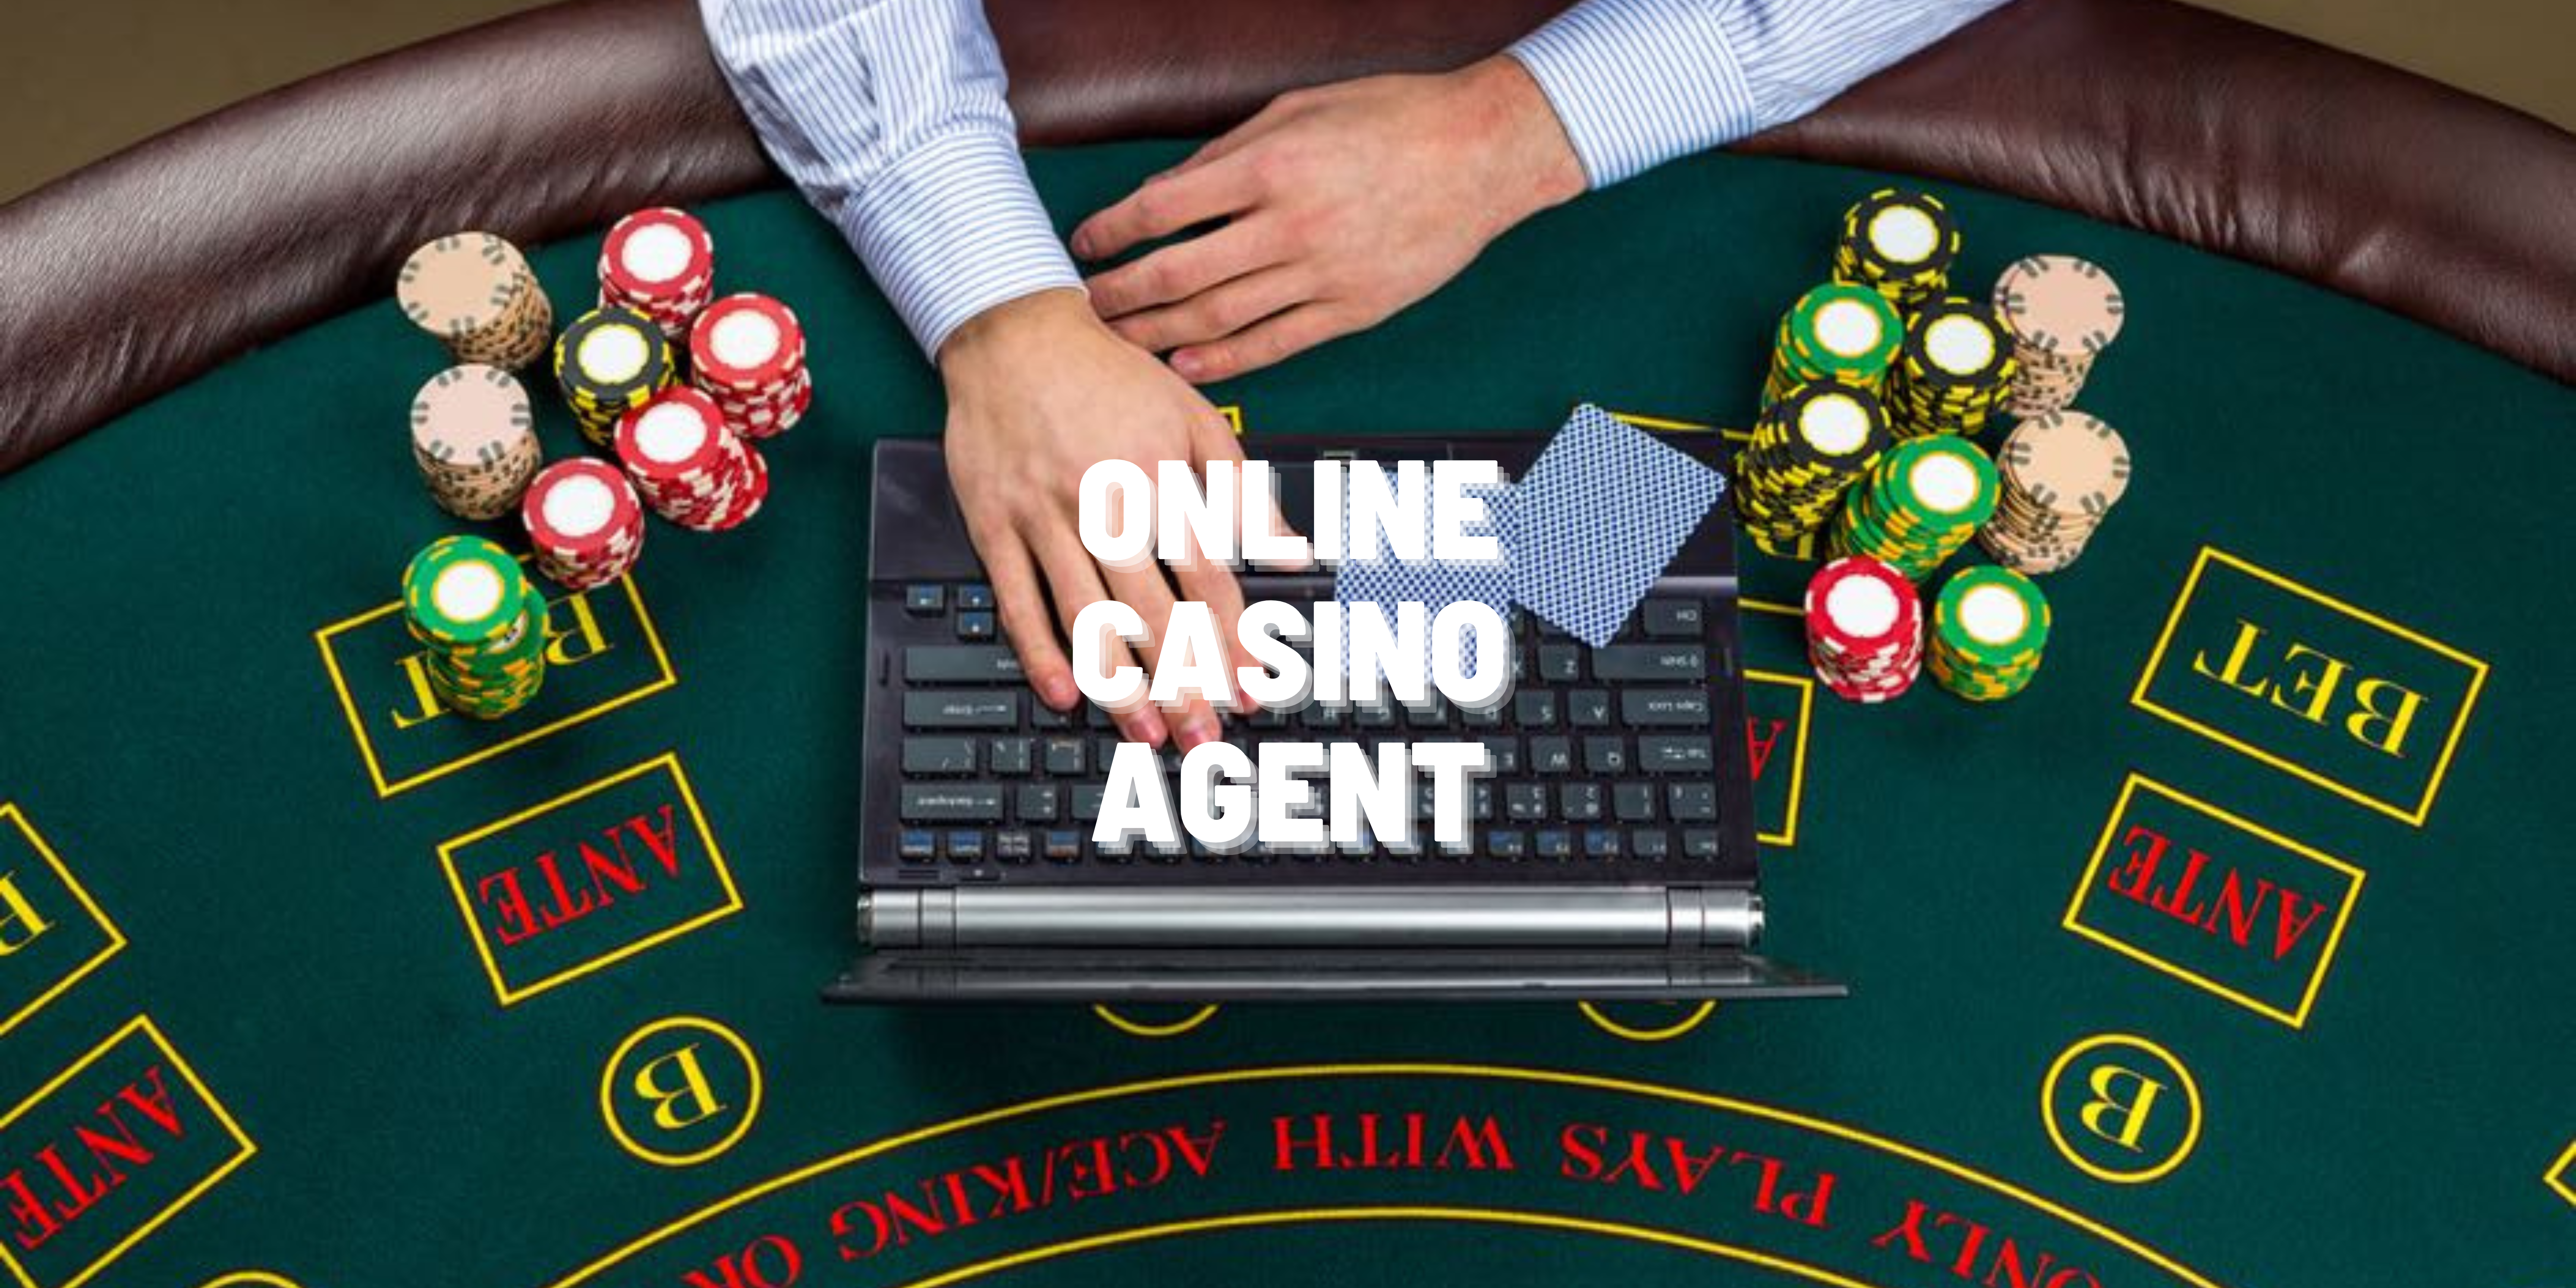 Online Casino Agent